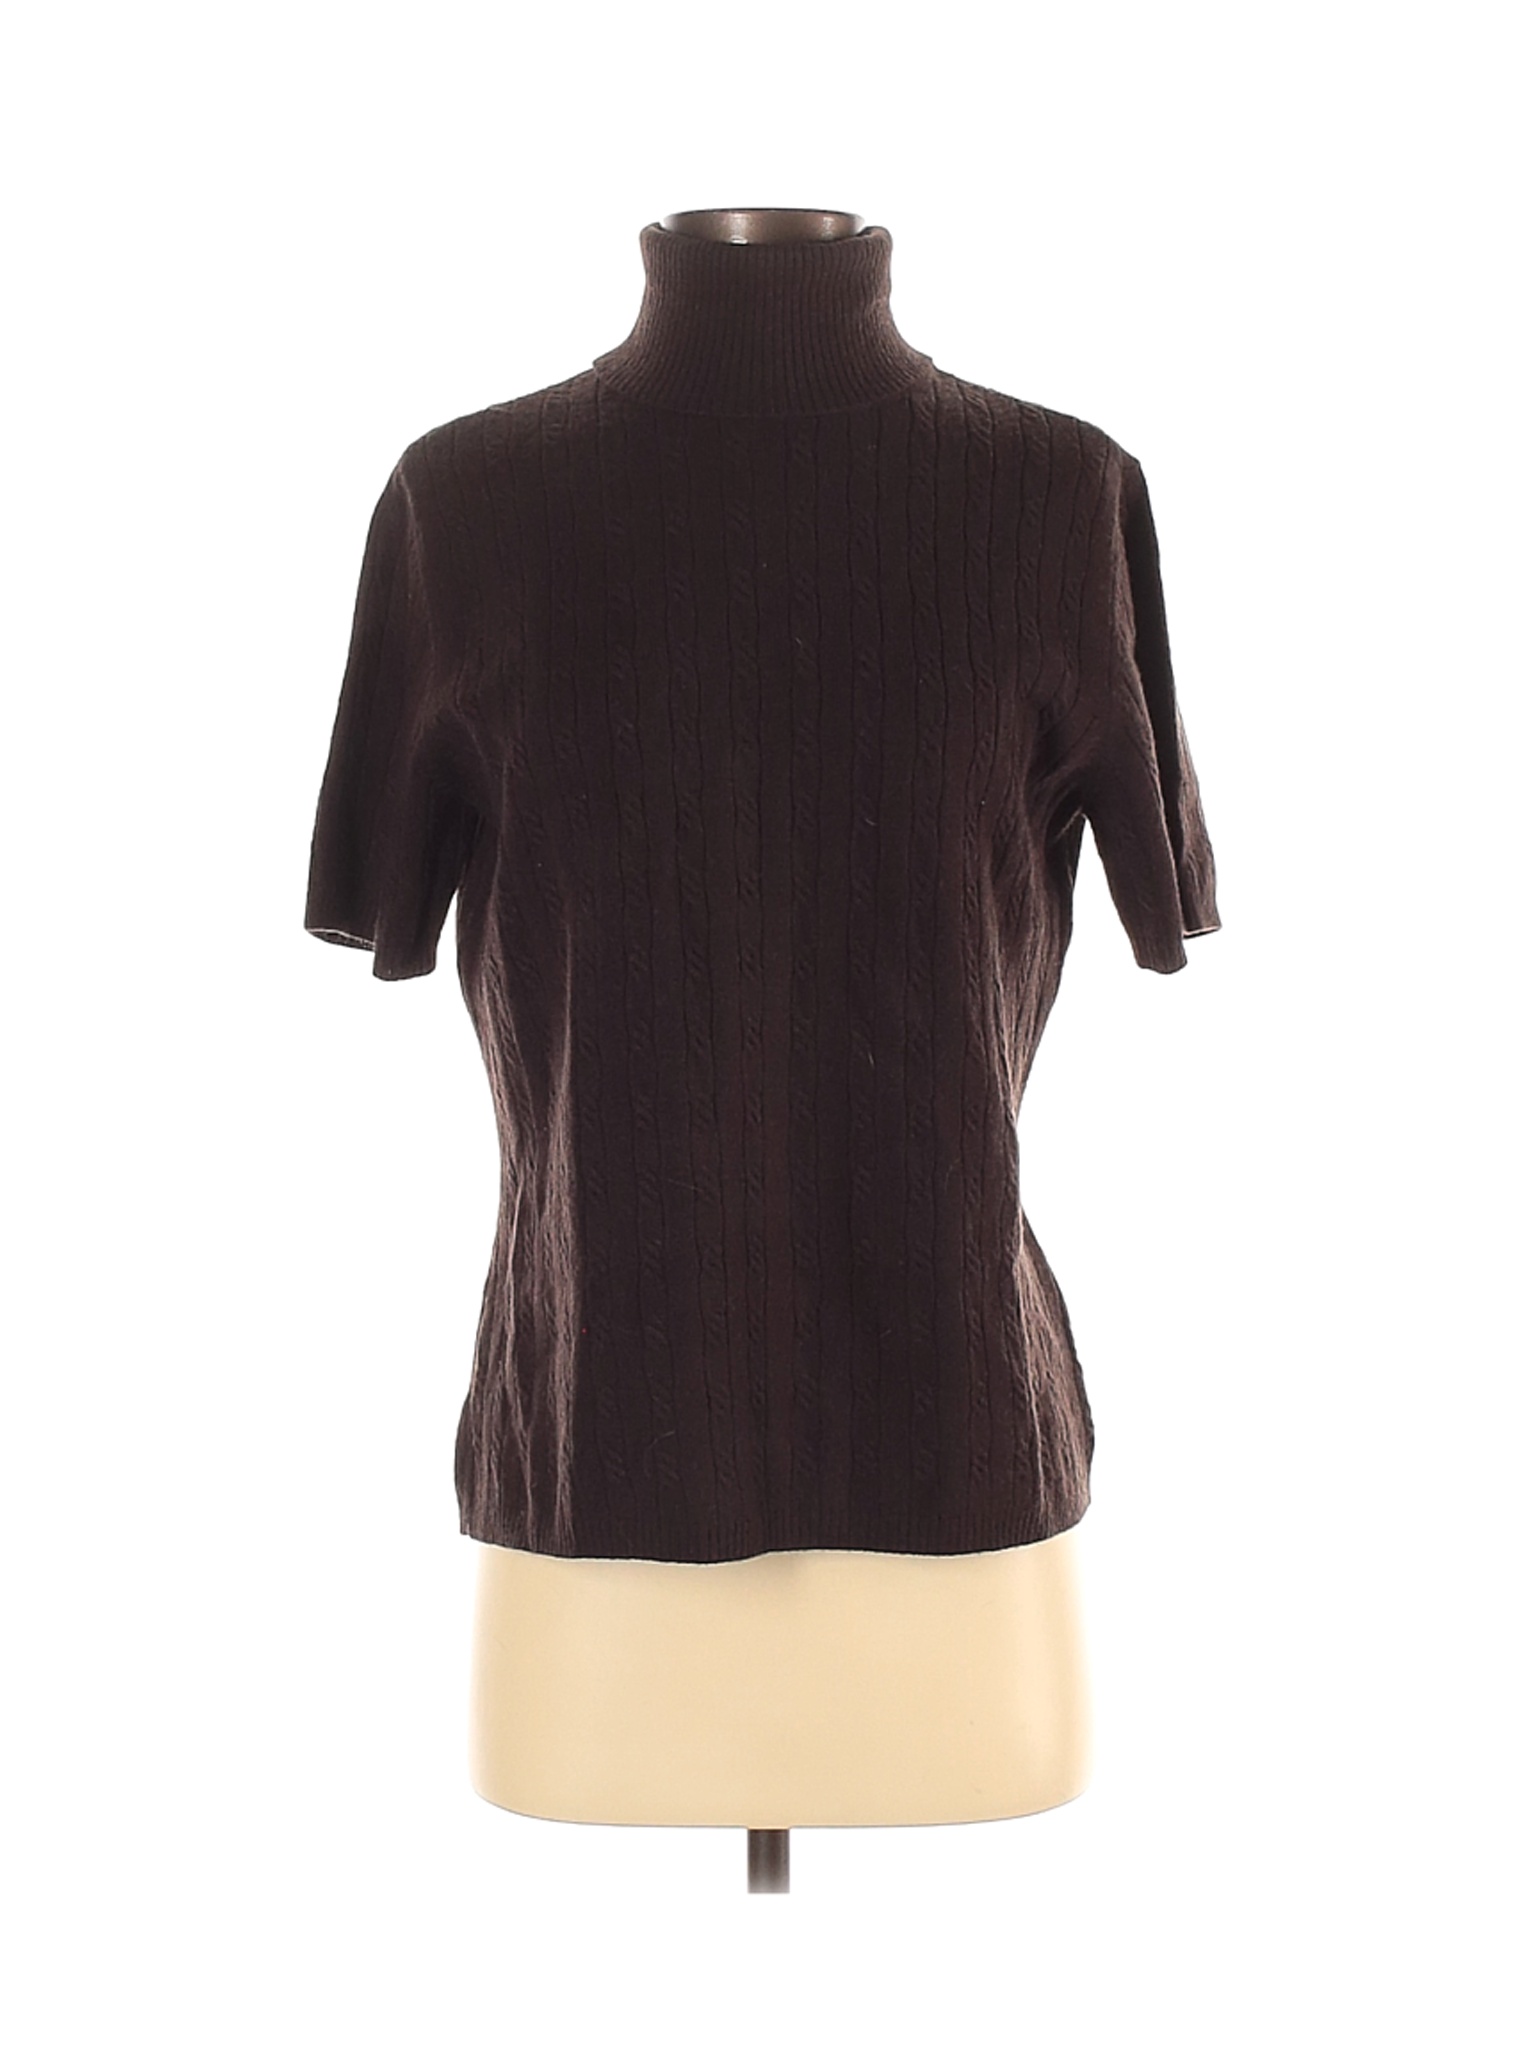 Talbots Women Brown Wool Pullover Sweater M | eBay